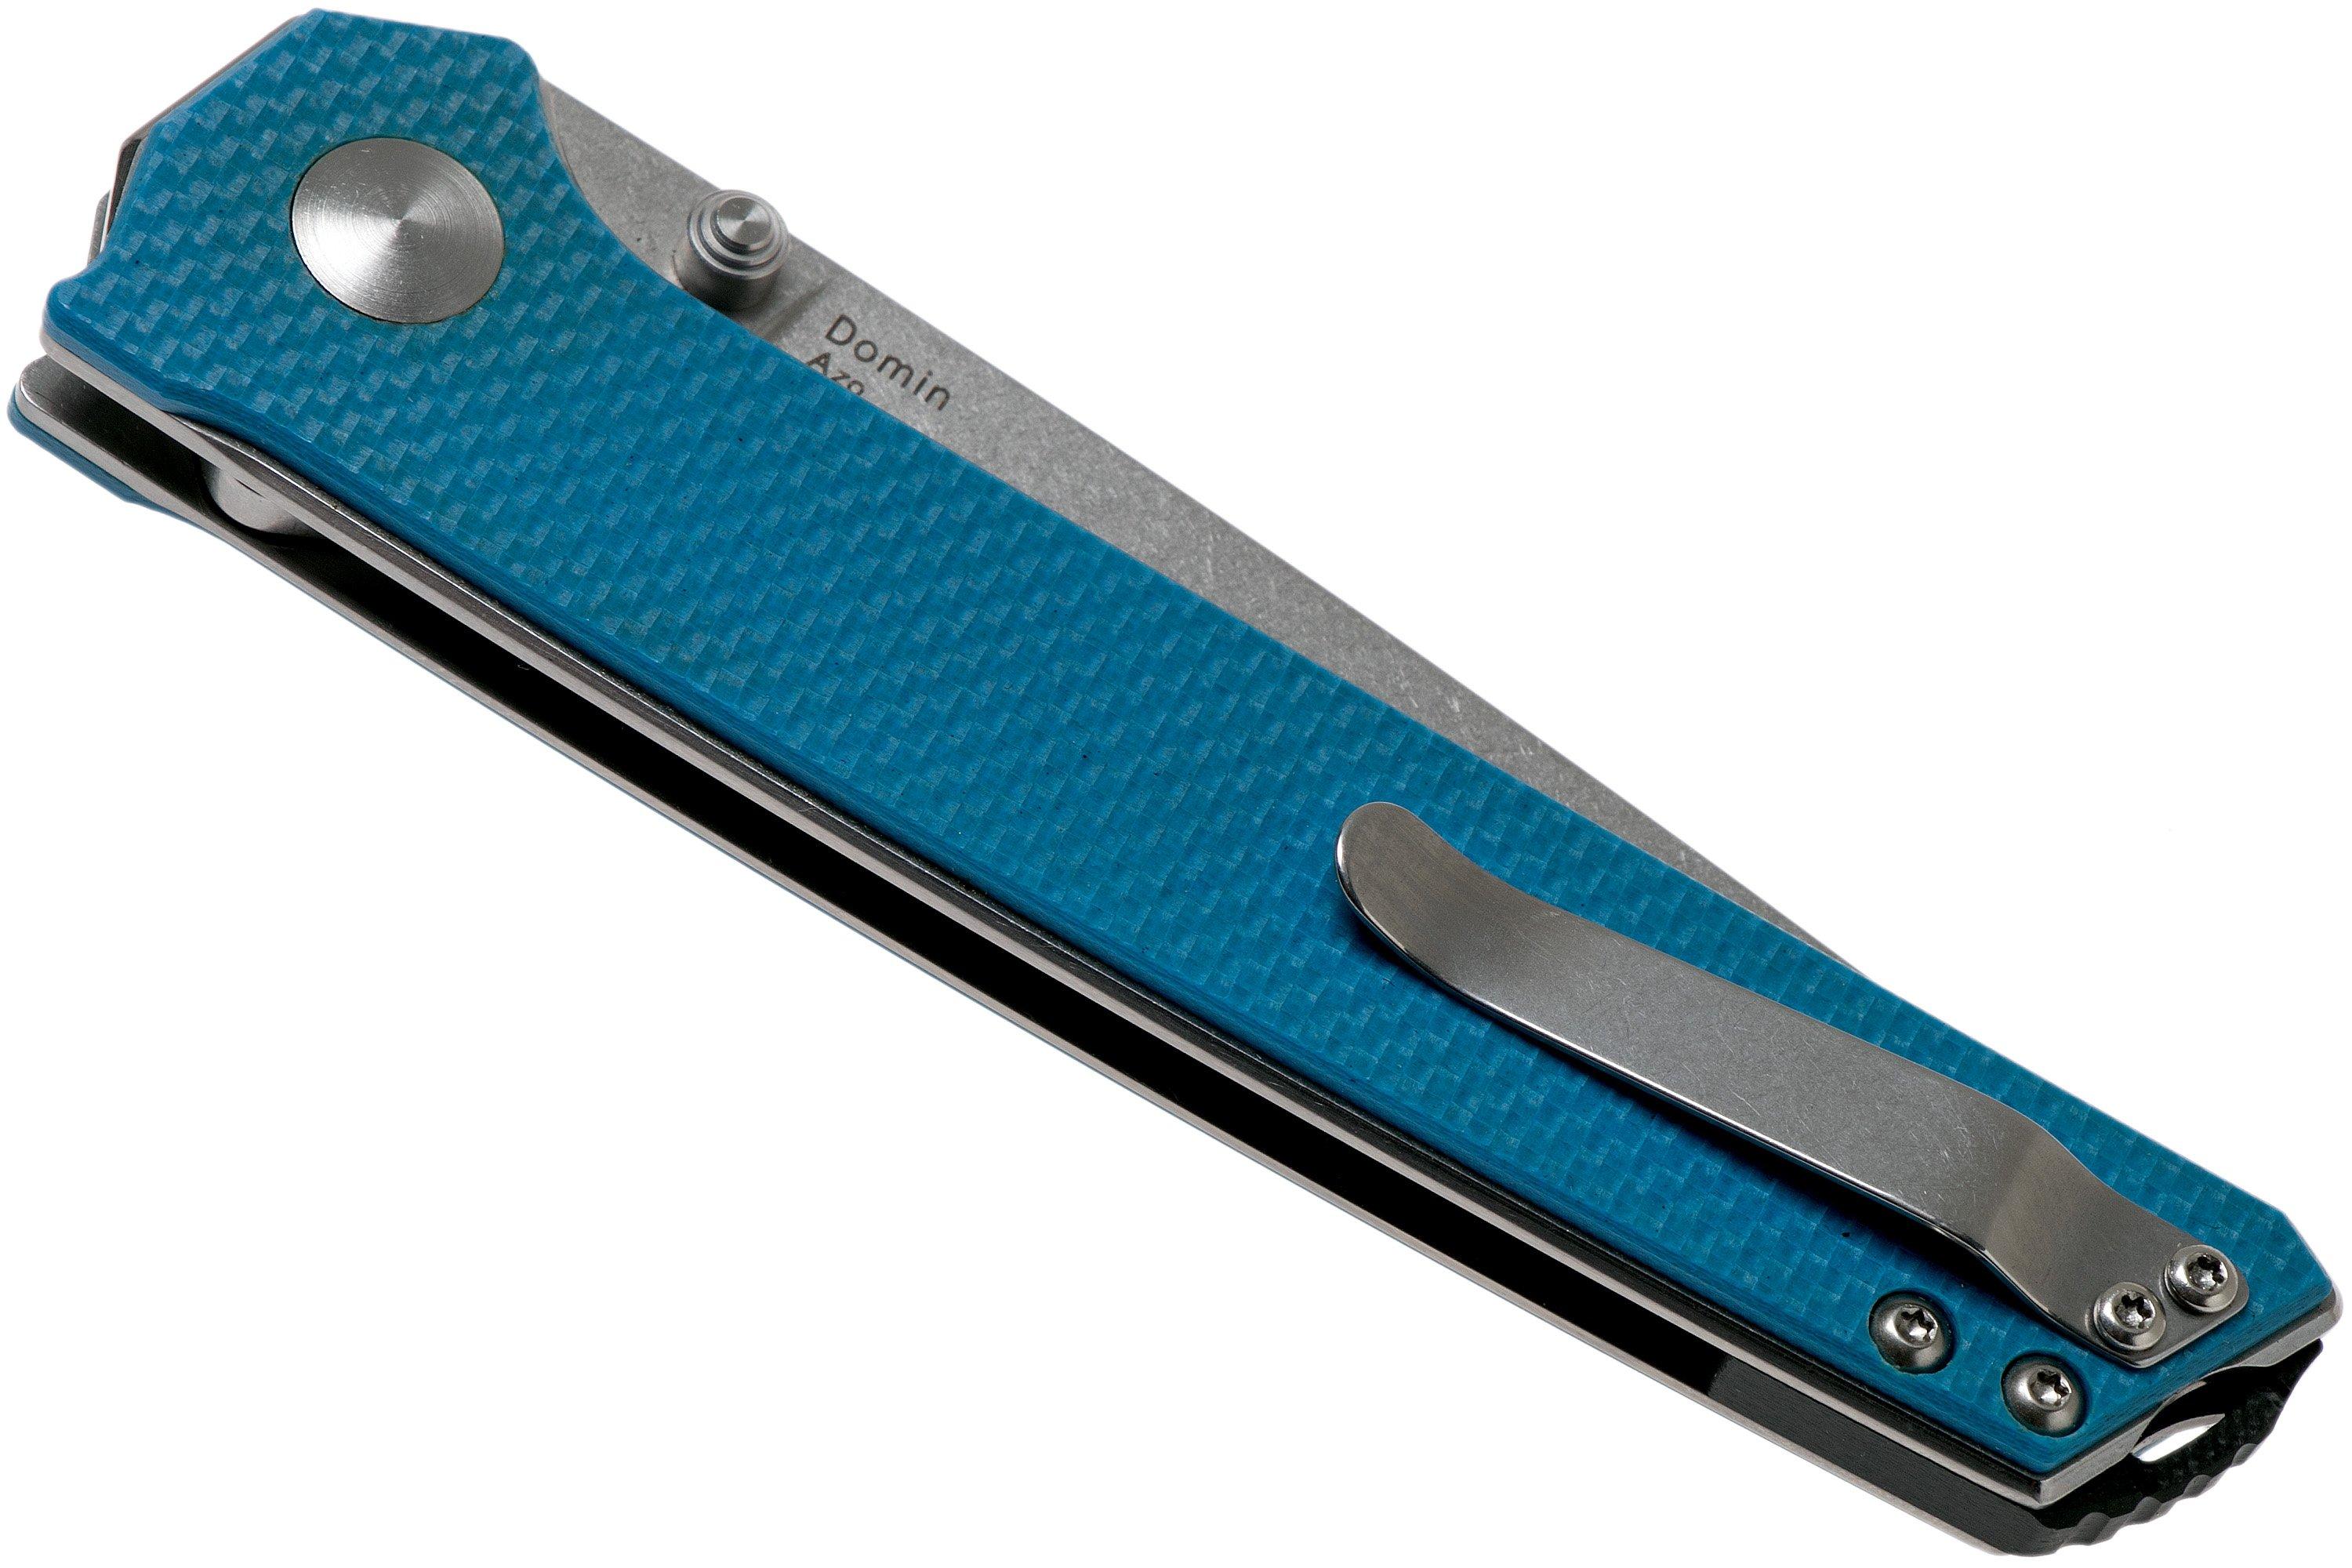 Kizer Vanguard Domin V4516A3 Blue pocket knife | Advantageously ...